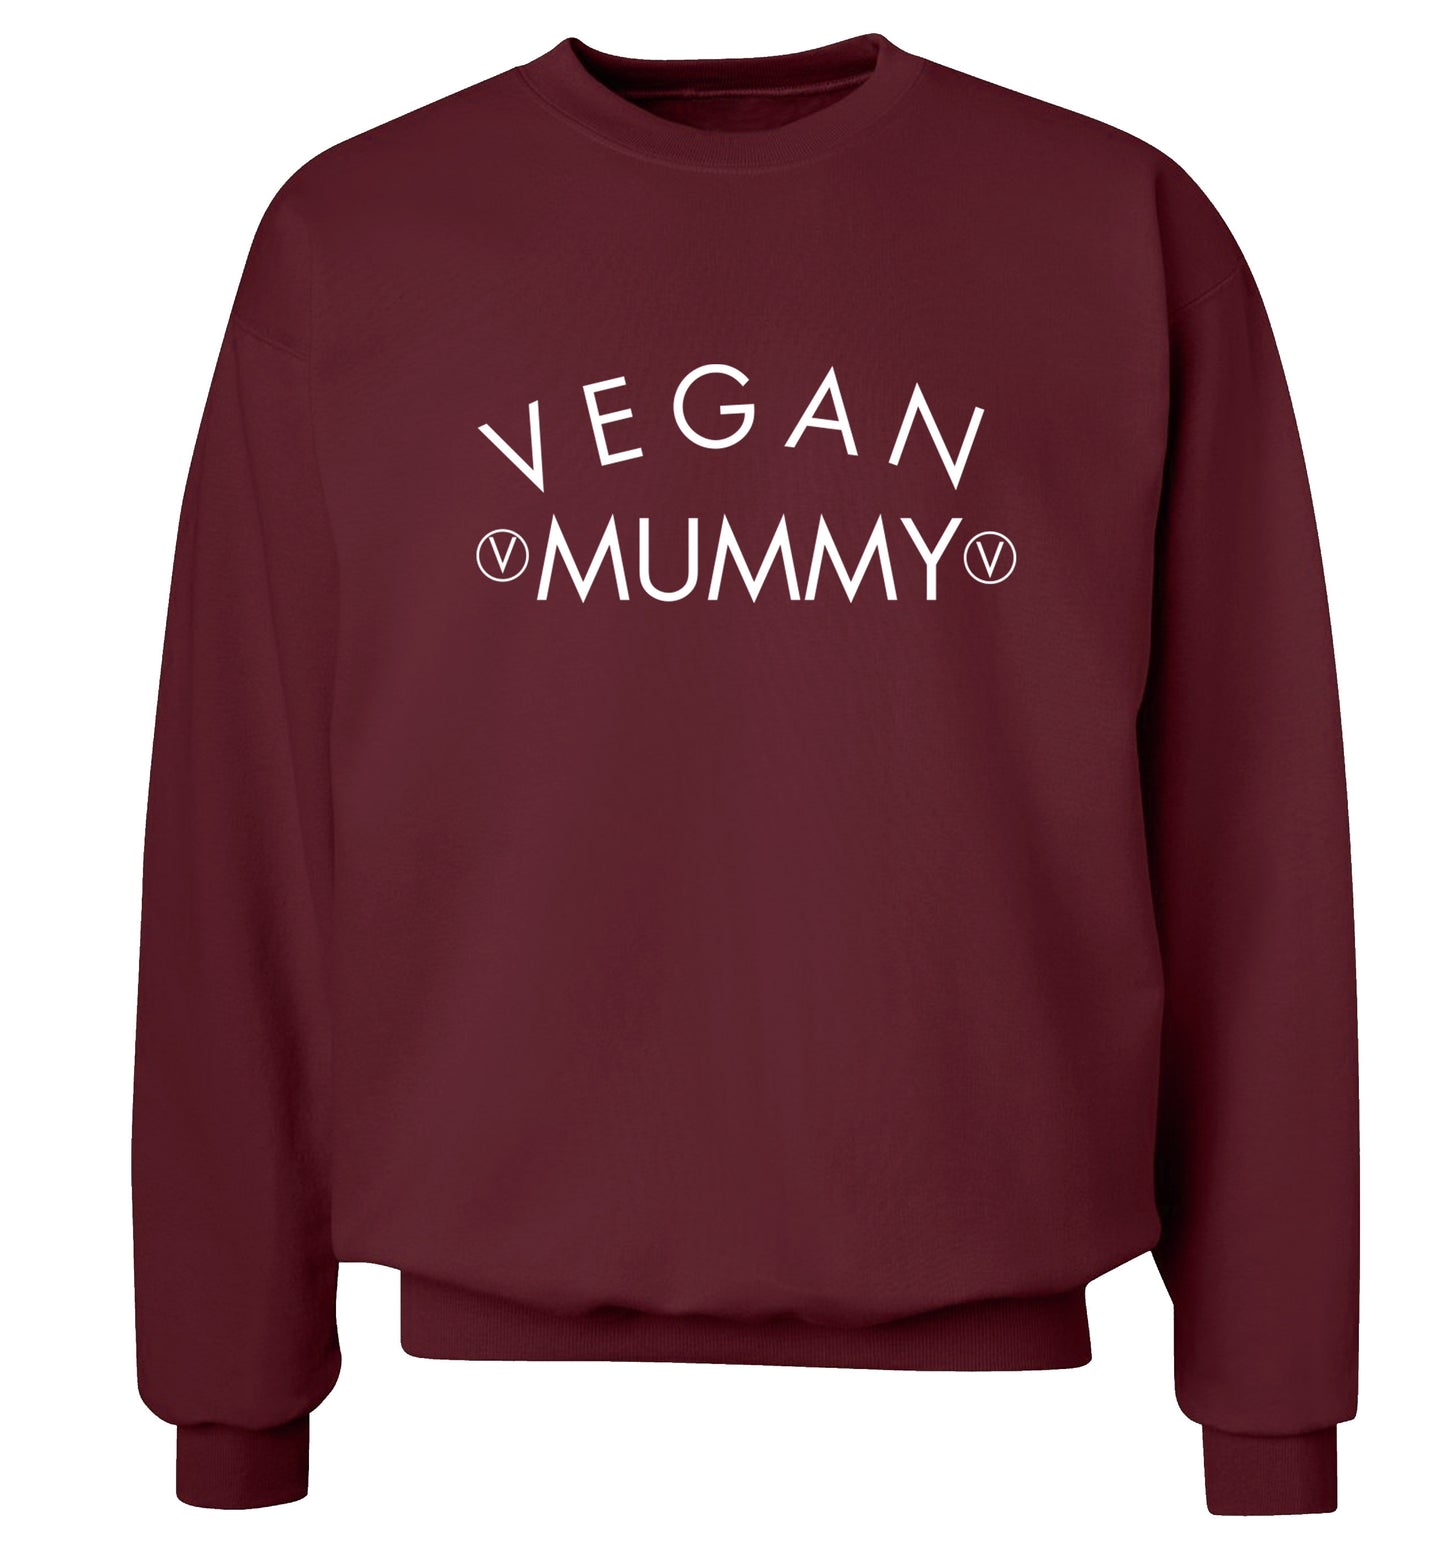 Vegan mummy Adult's unisex maroon Sweater 2XL